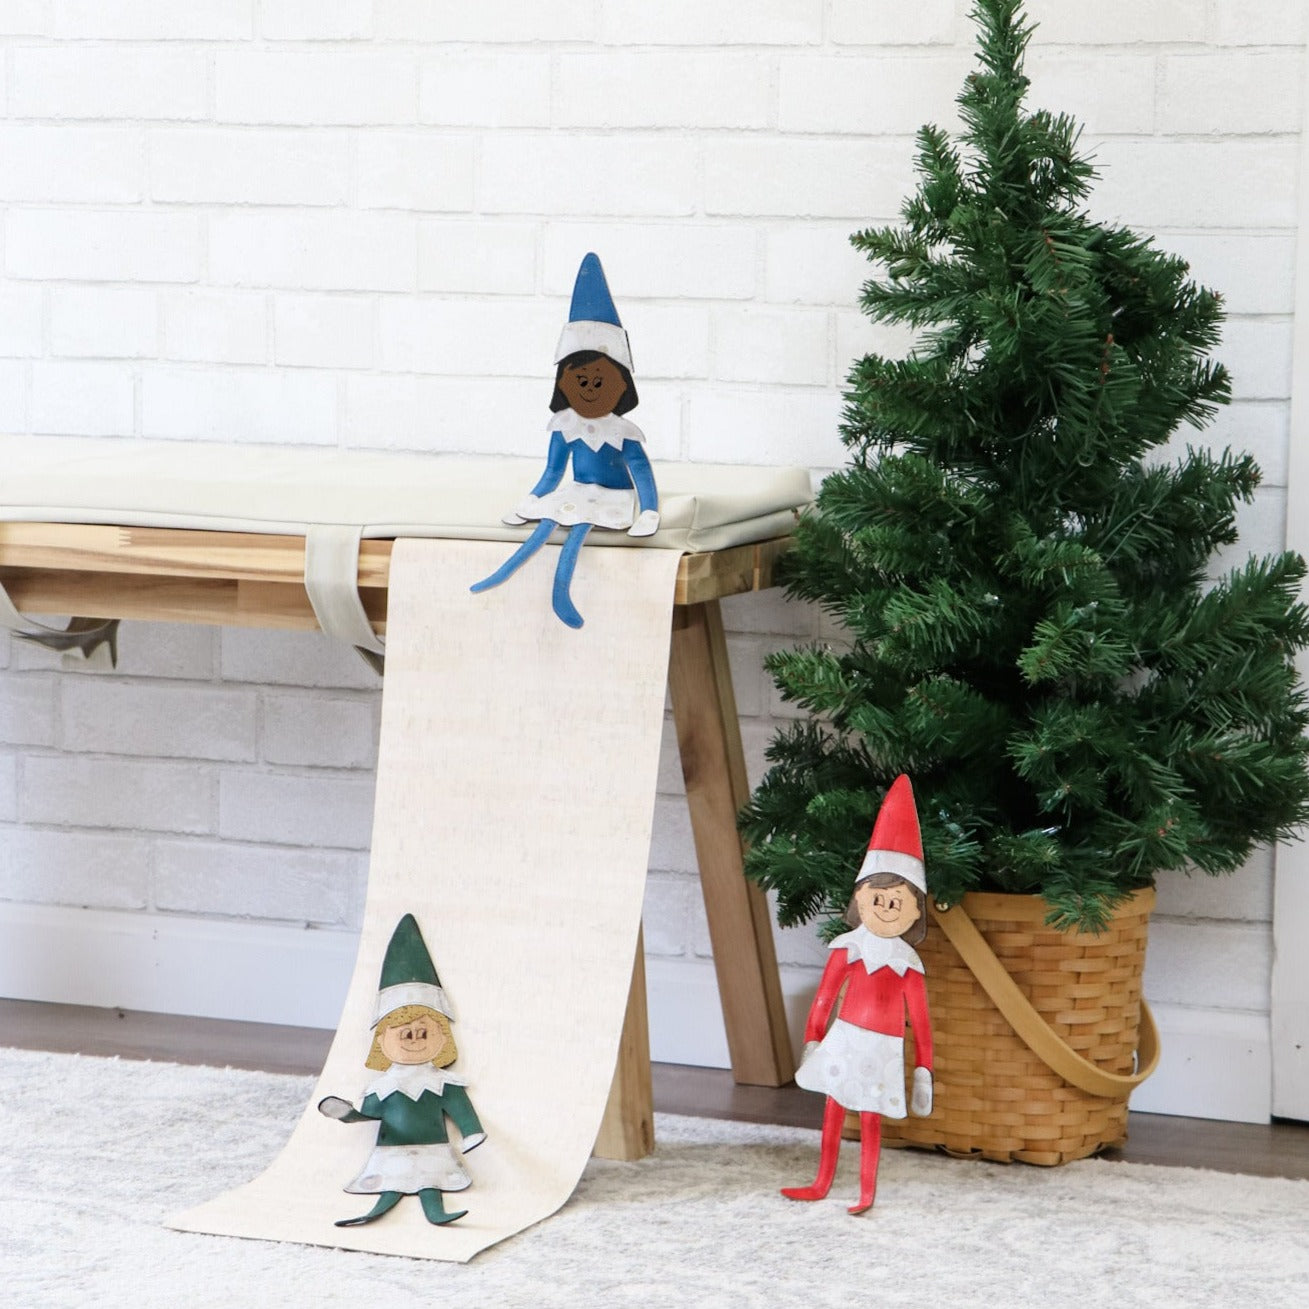 White Christmas - Cardstock - Night Before Christmas Eve Elf the Shelf –  MISS KATE